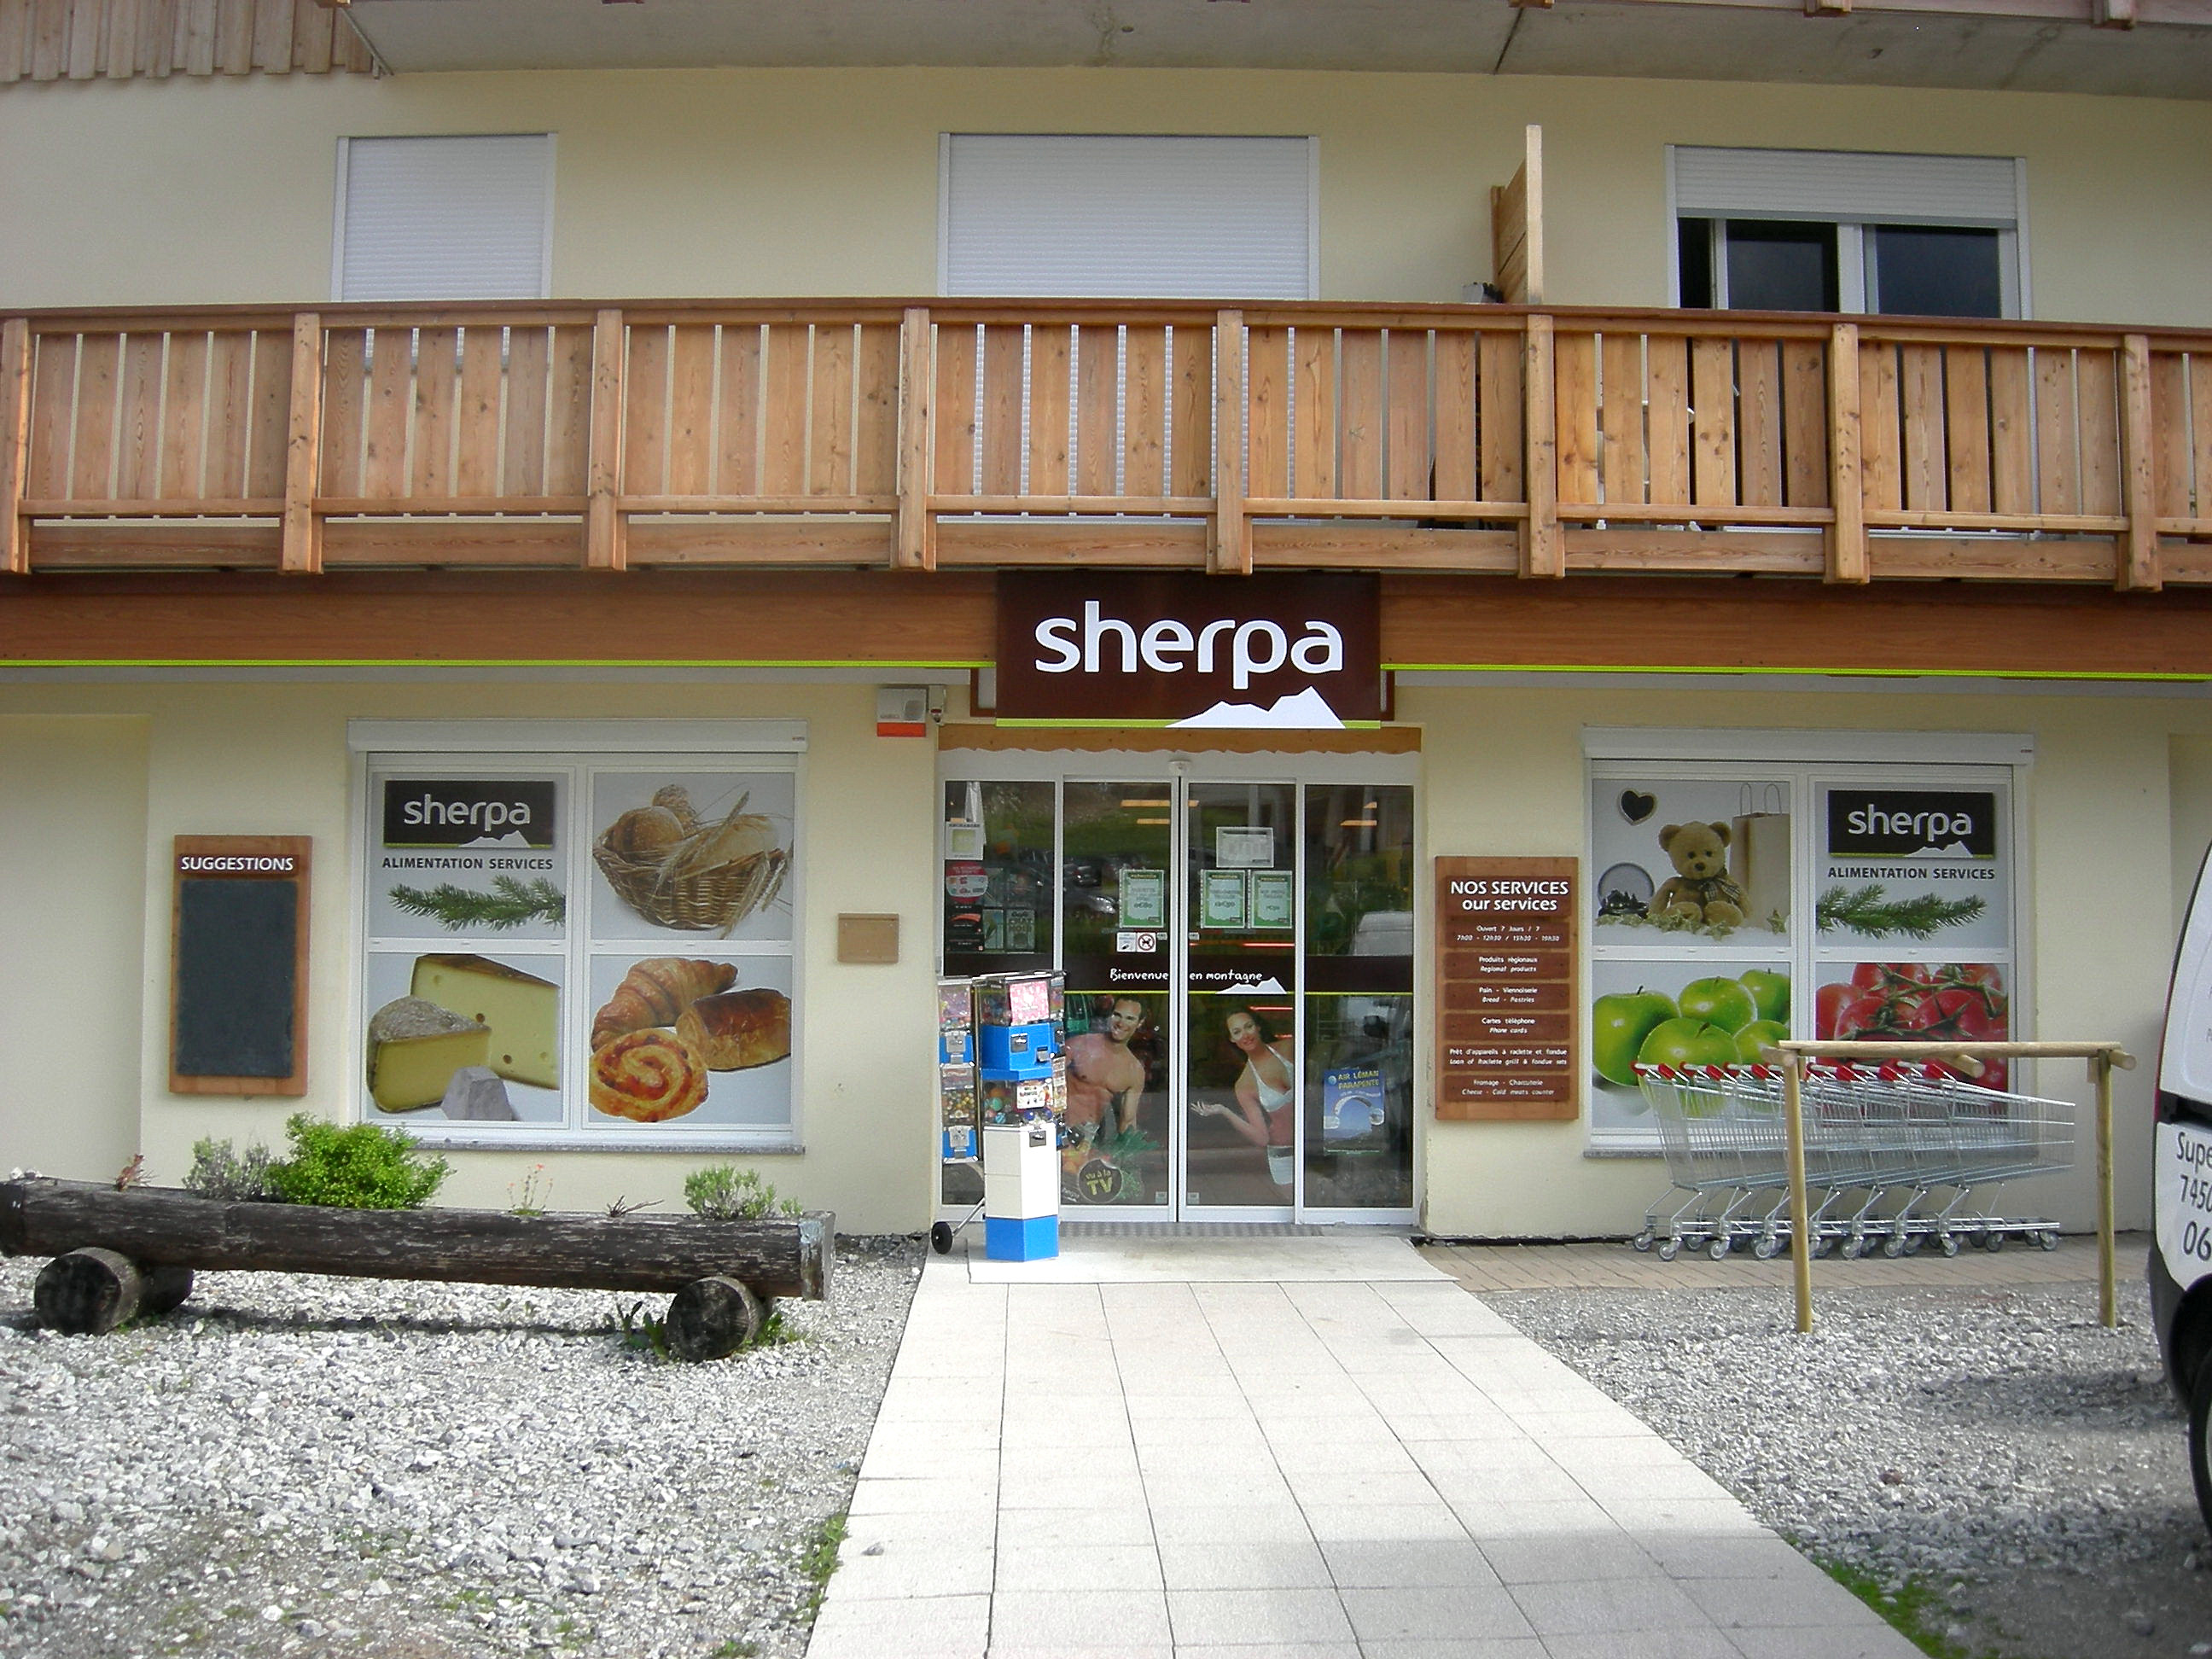 Sherpa station